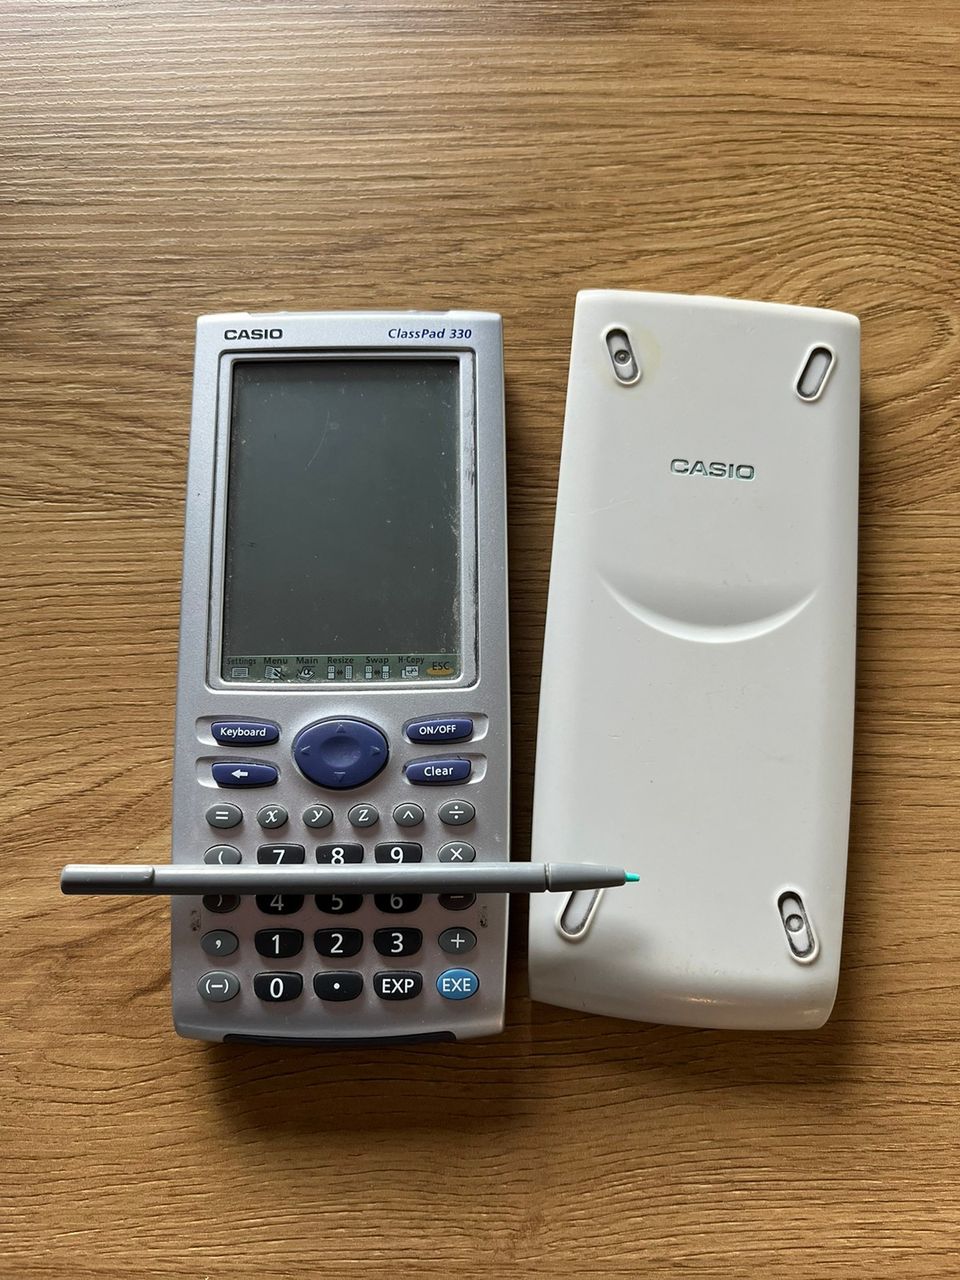 Casio ClassPad330